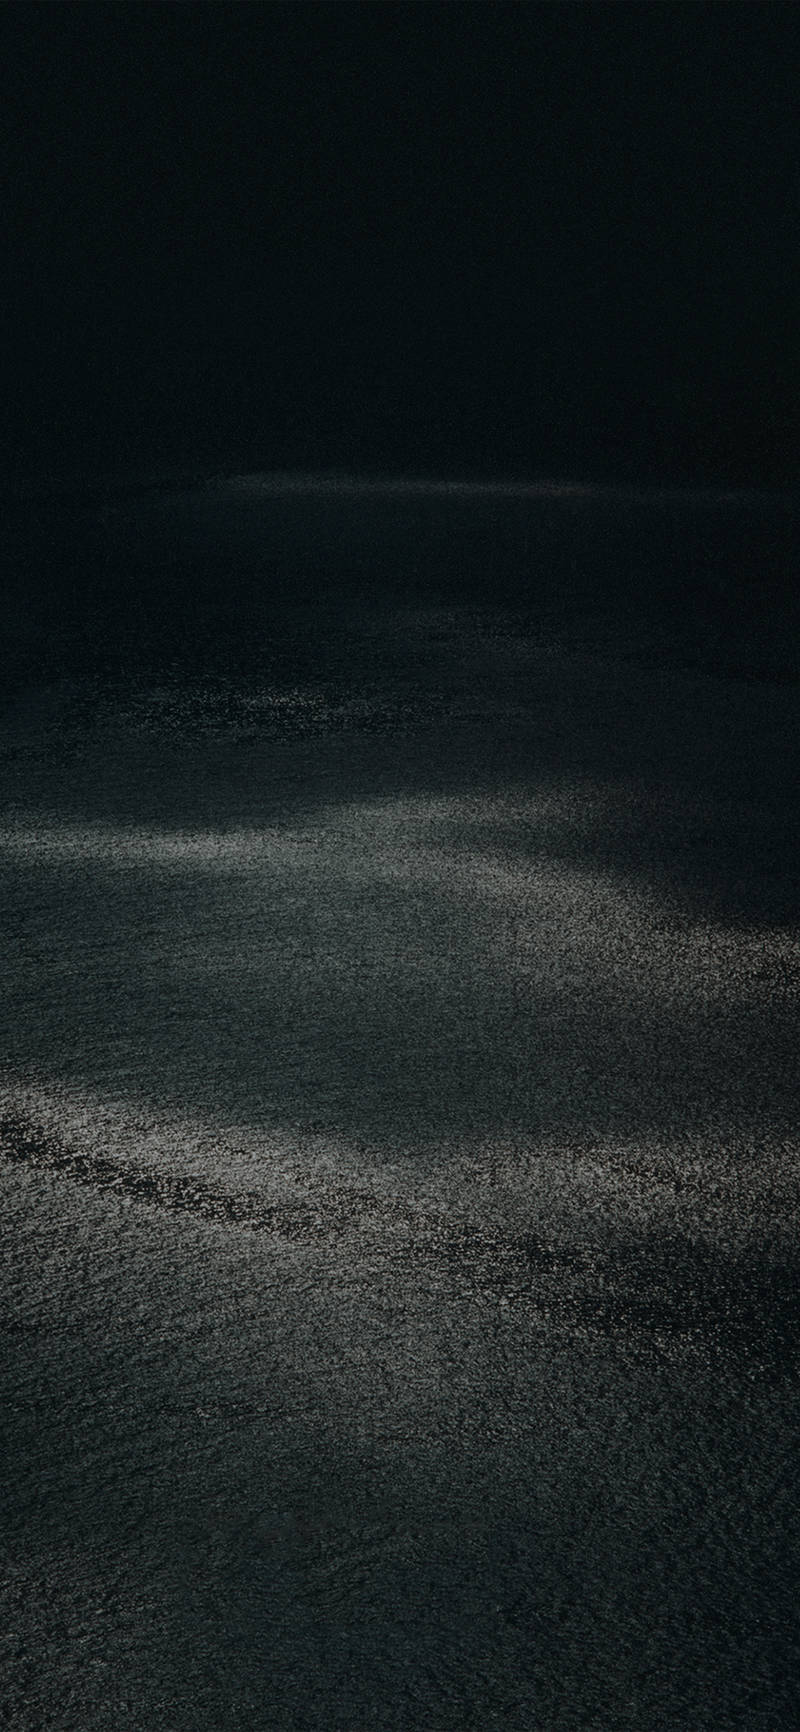 2017 iphone wallpaper,schwarz,dunkelheit,atmosphäre,himmel,licht